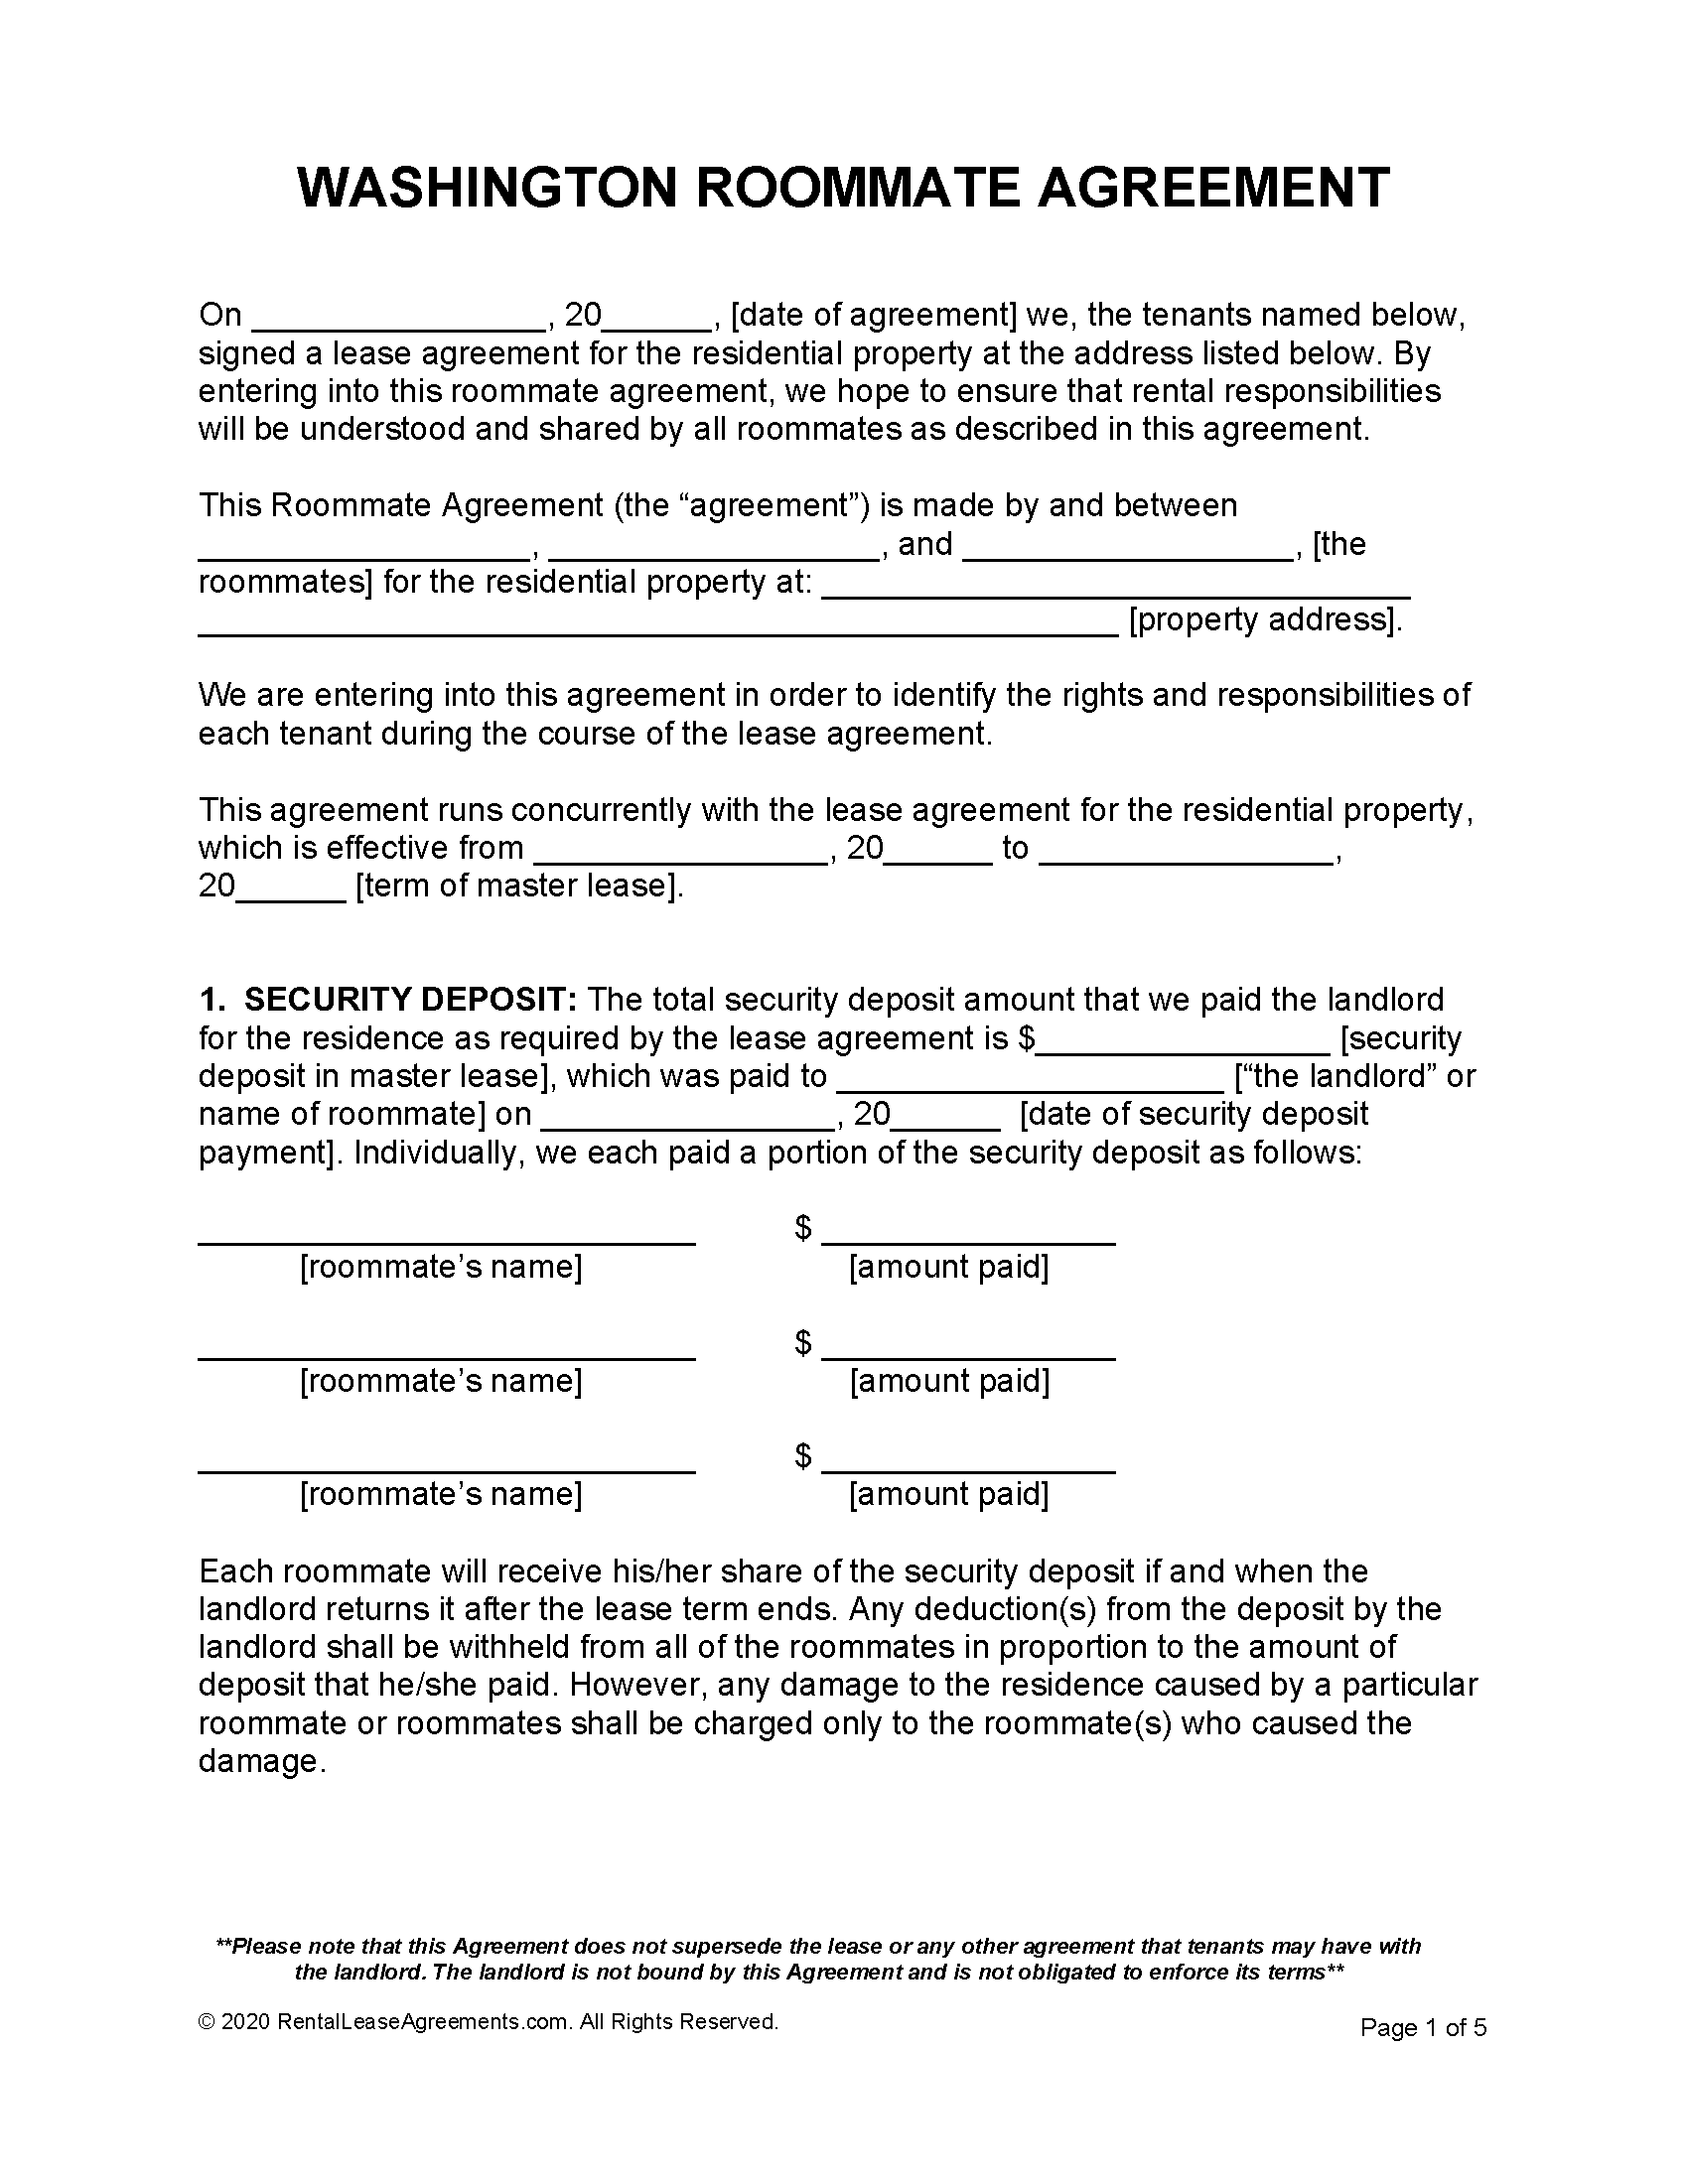 free-washington-roommate-agreement-pdf-ms-word